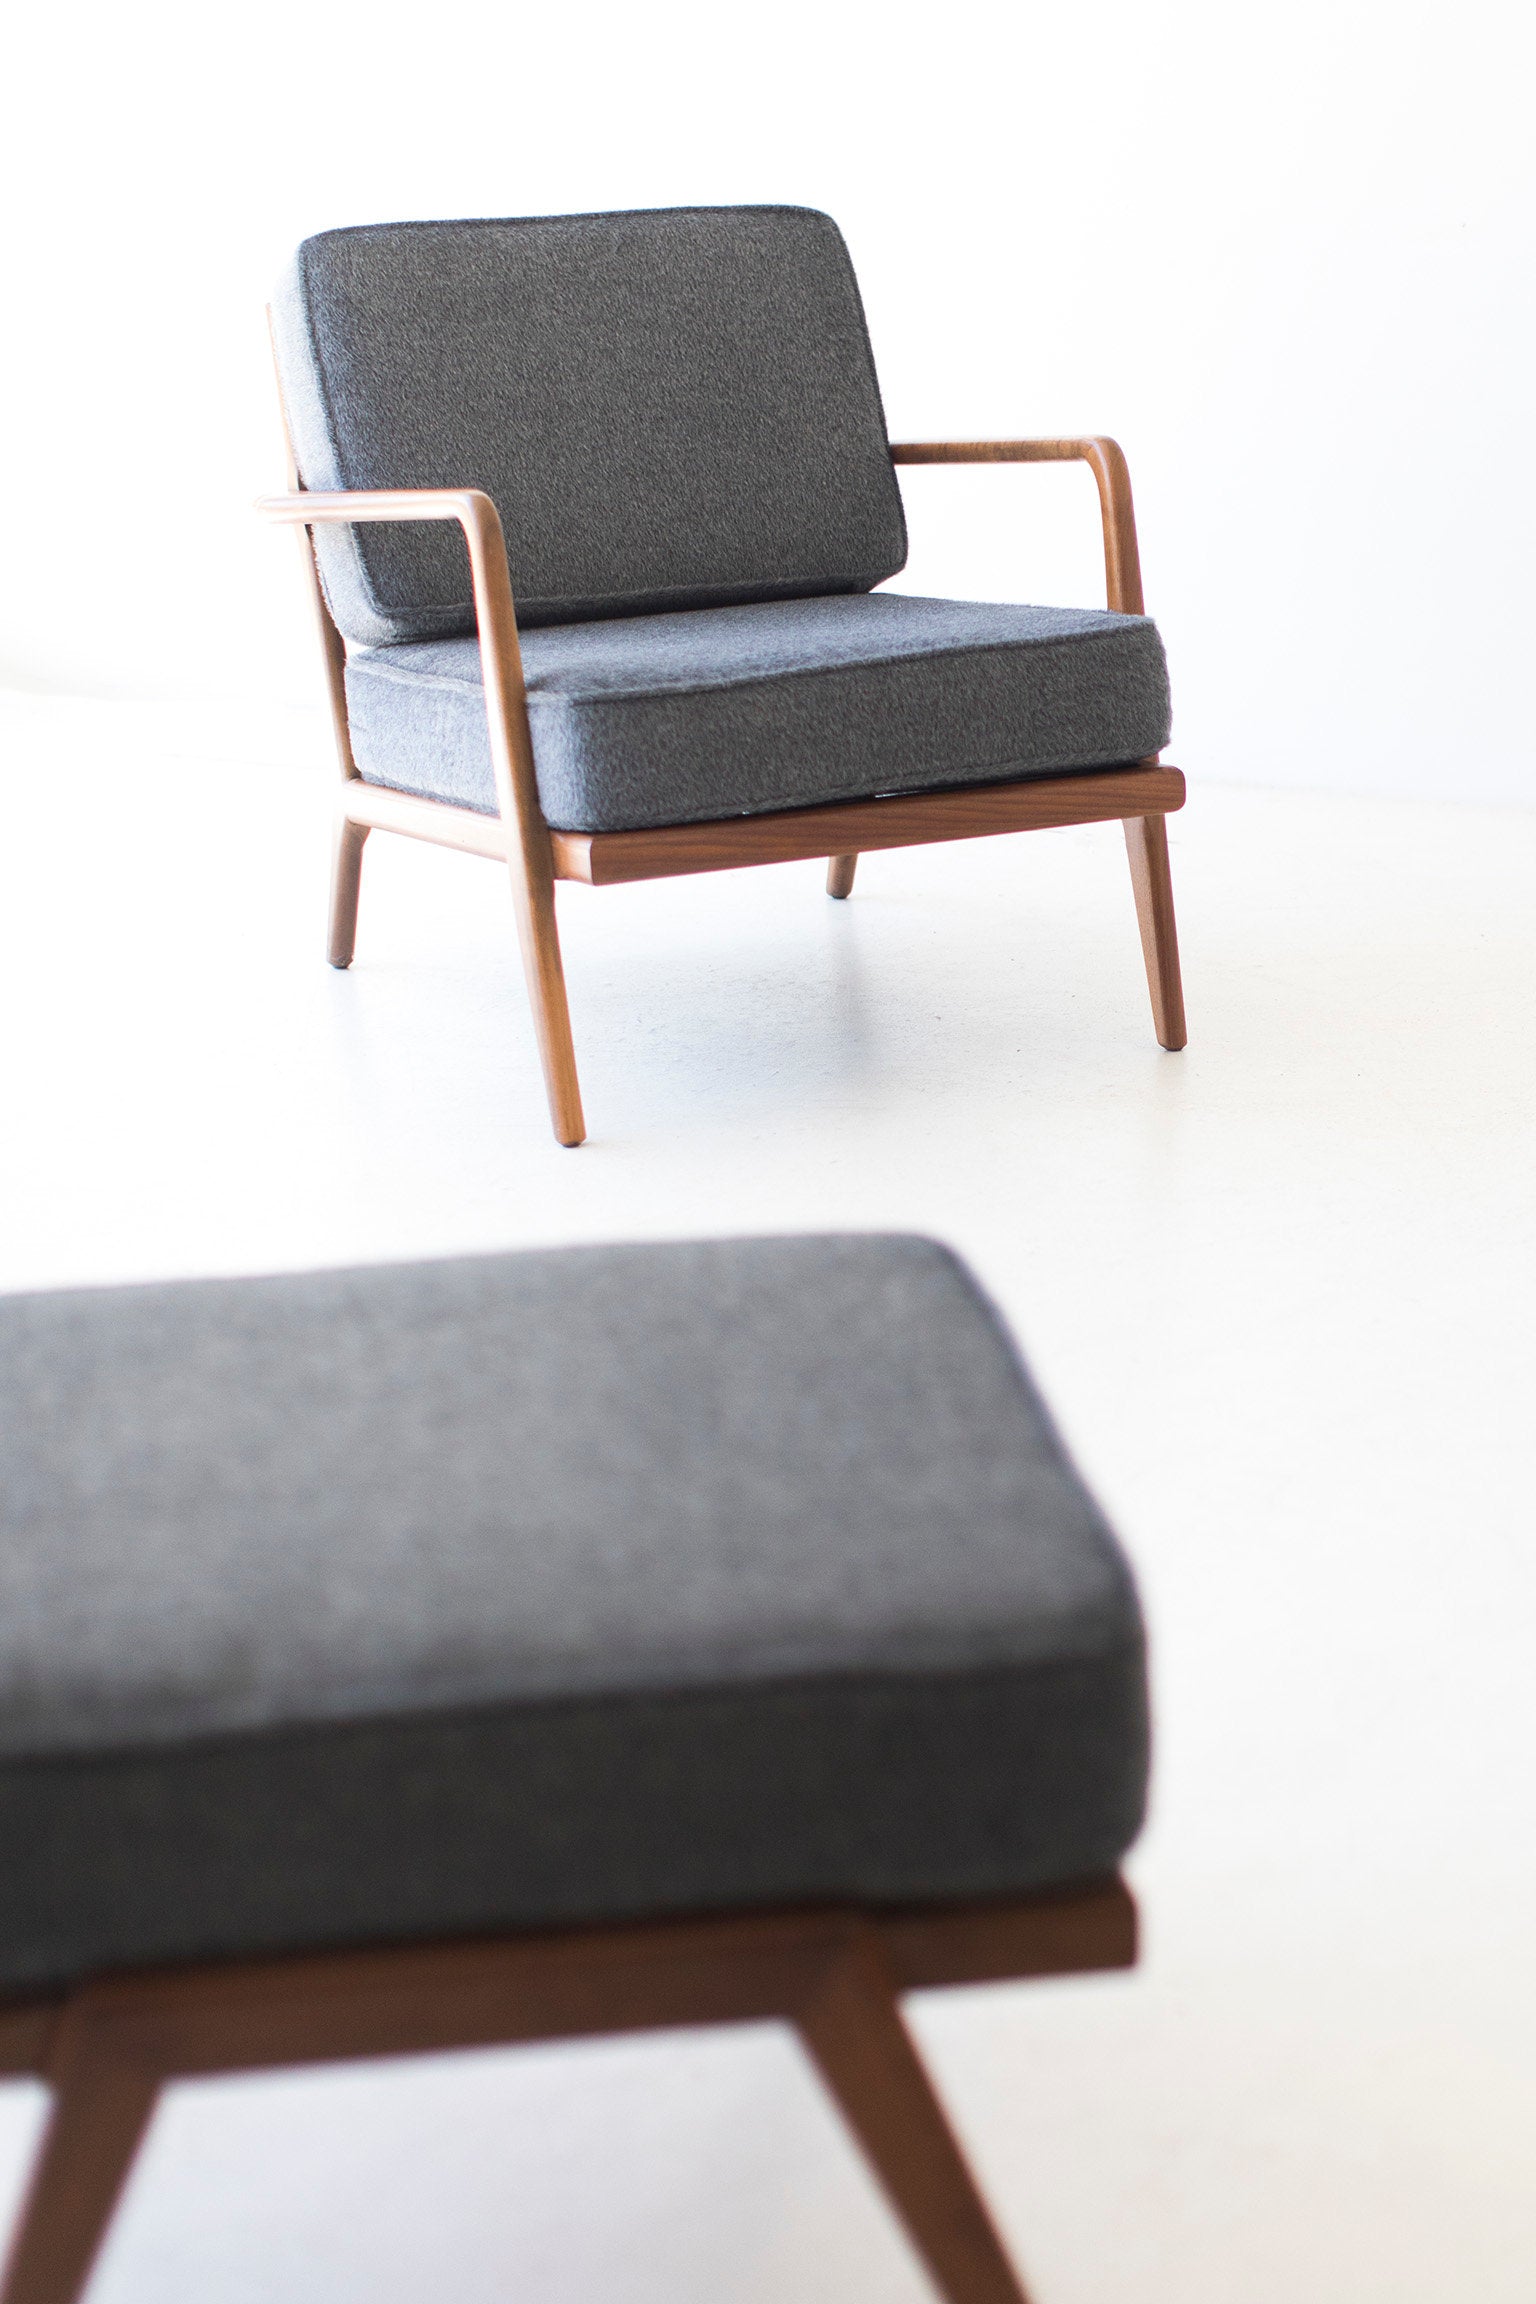 Mel Smilow Lounge Chair and Ottoman for Smilow-Thielle - 08081701